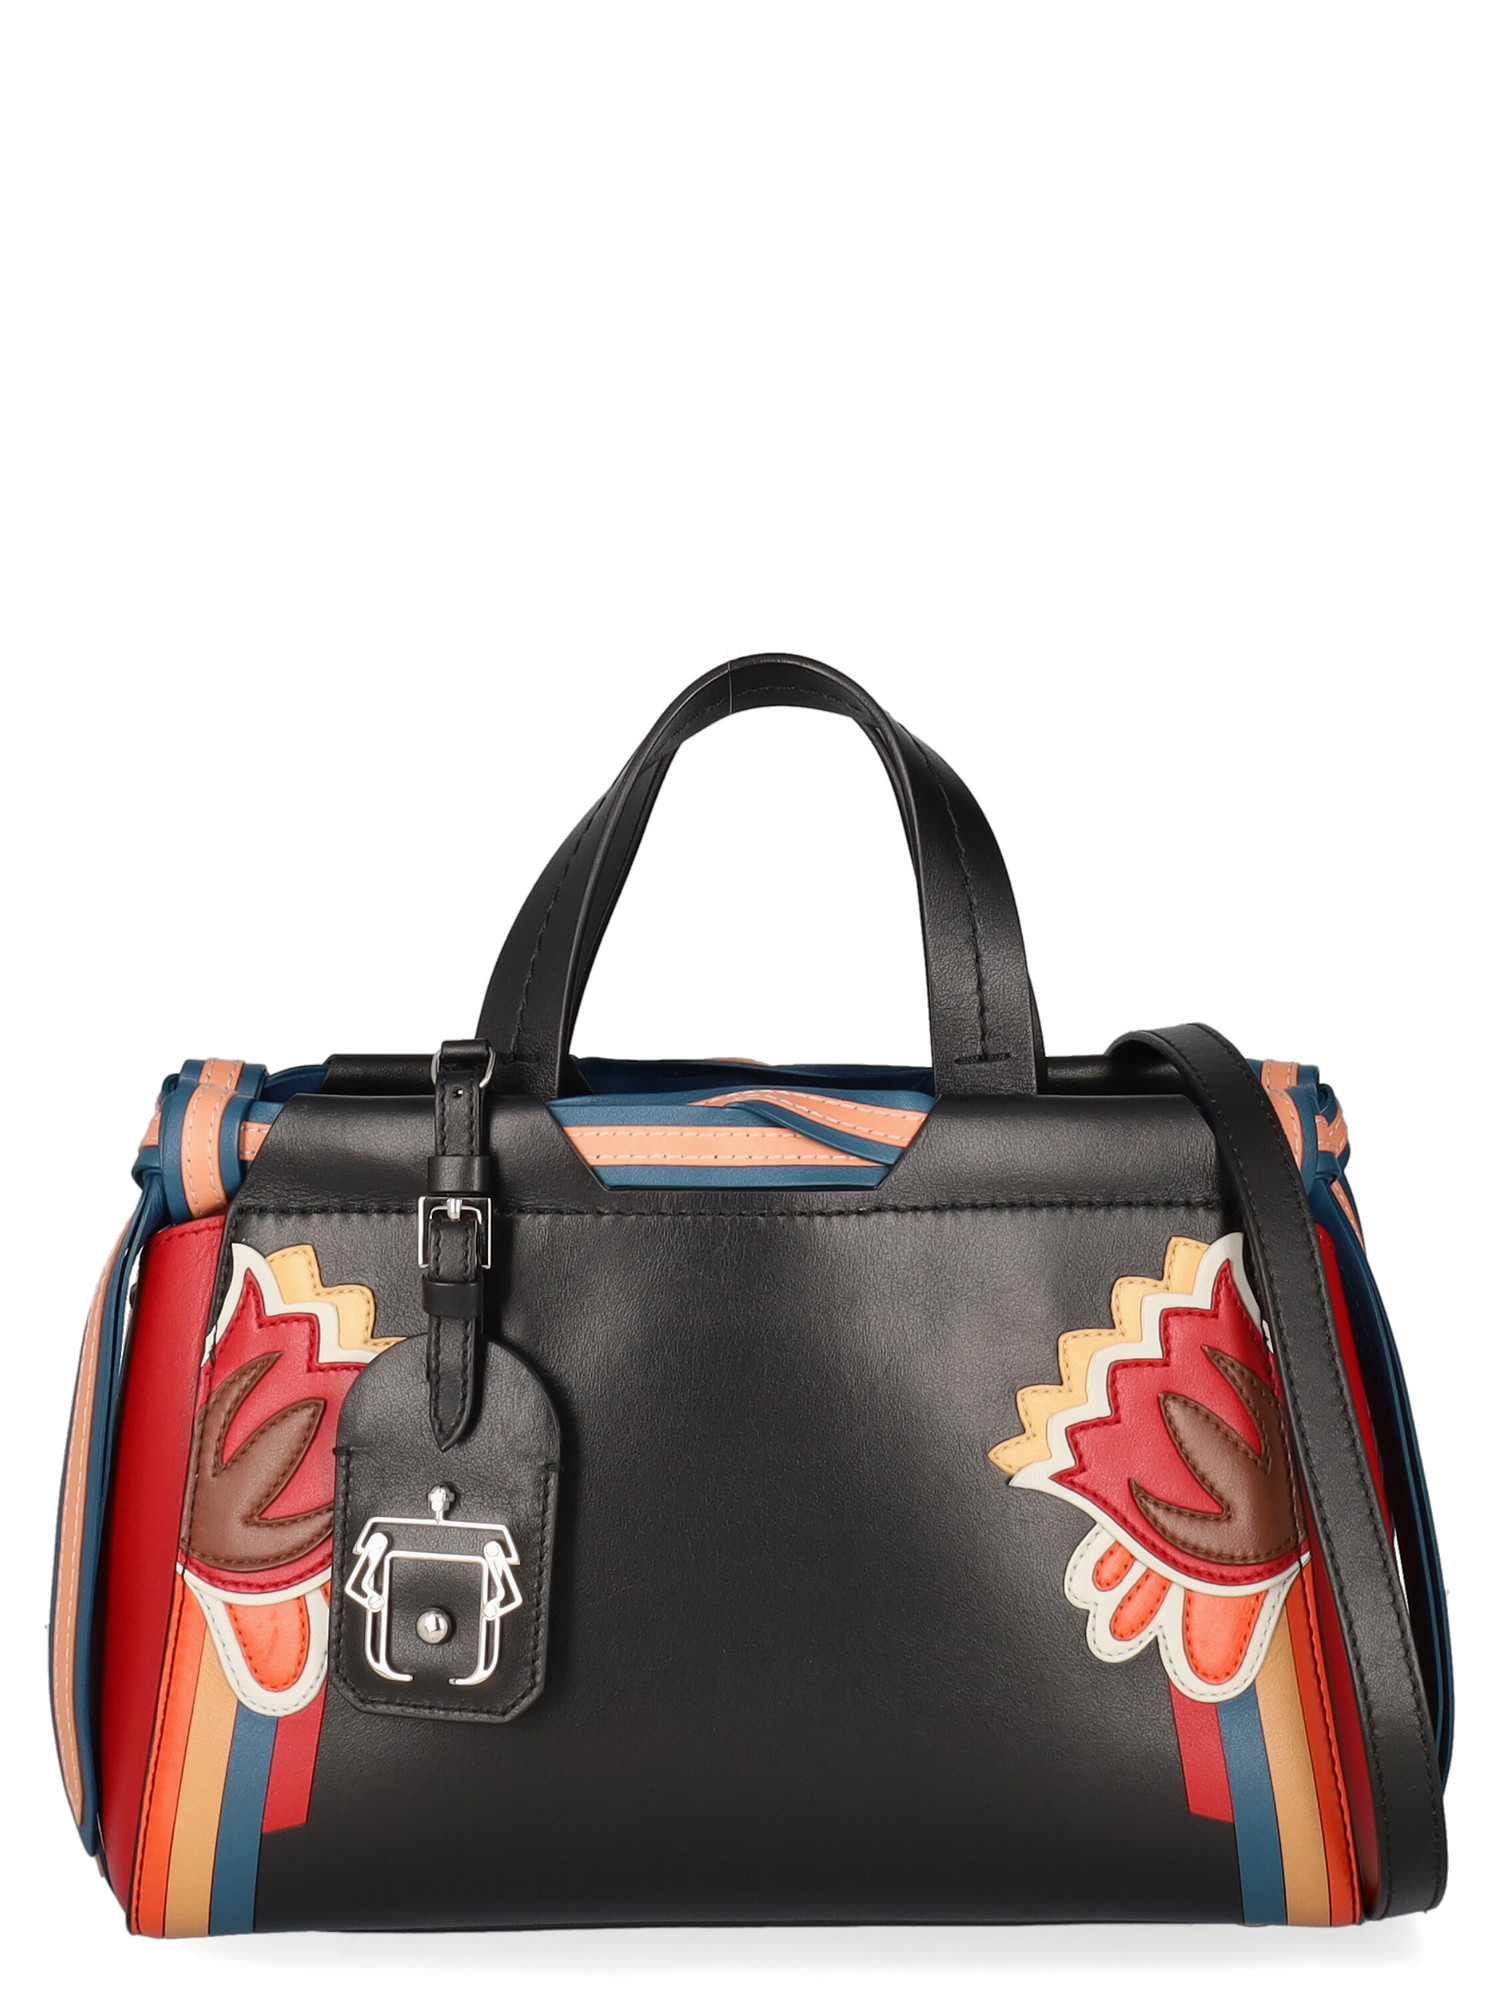 Pre-owned Paula Cademartori Handbags In Black, Red